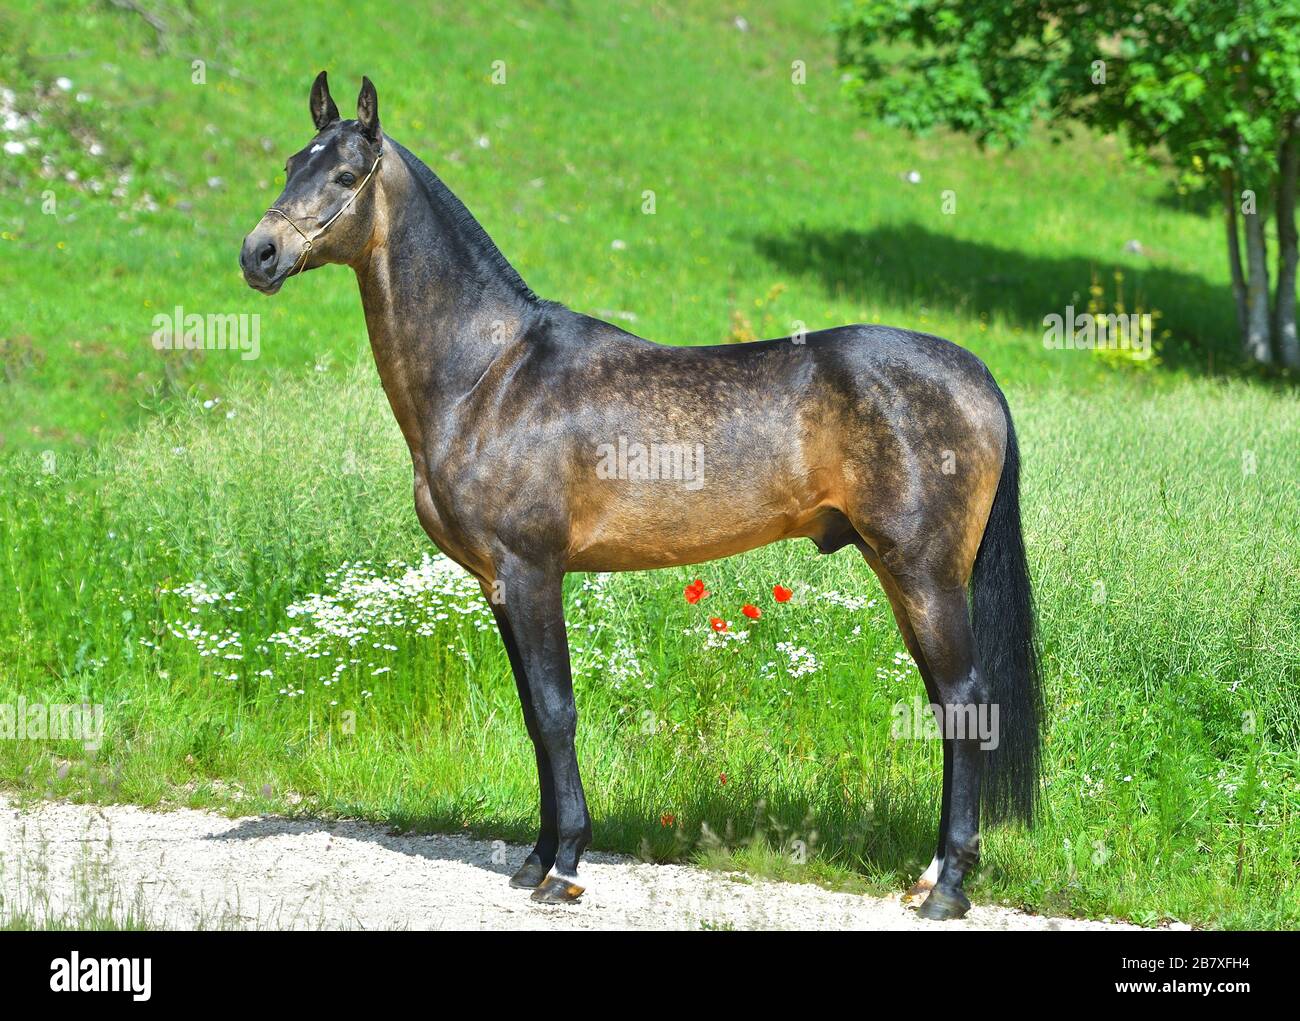 sooty buckskin quarter horse